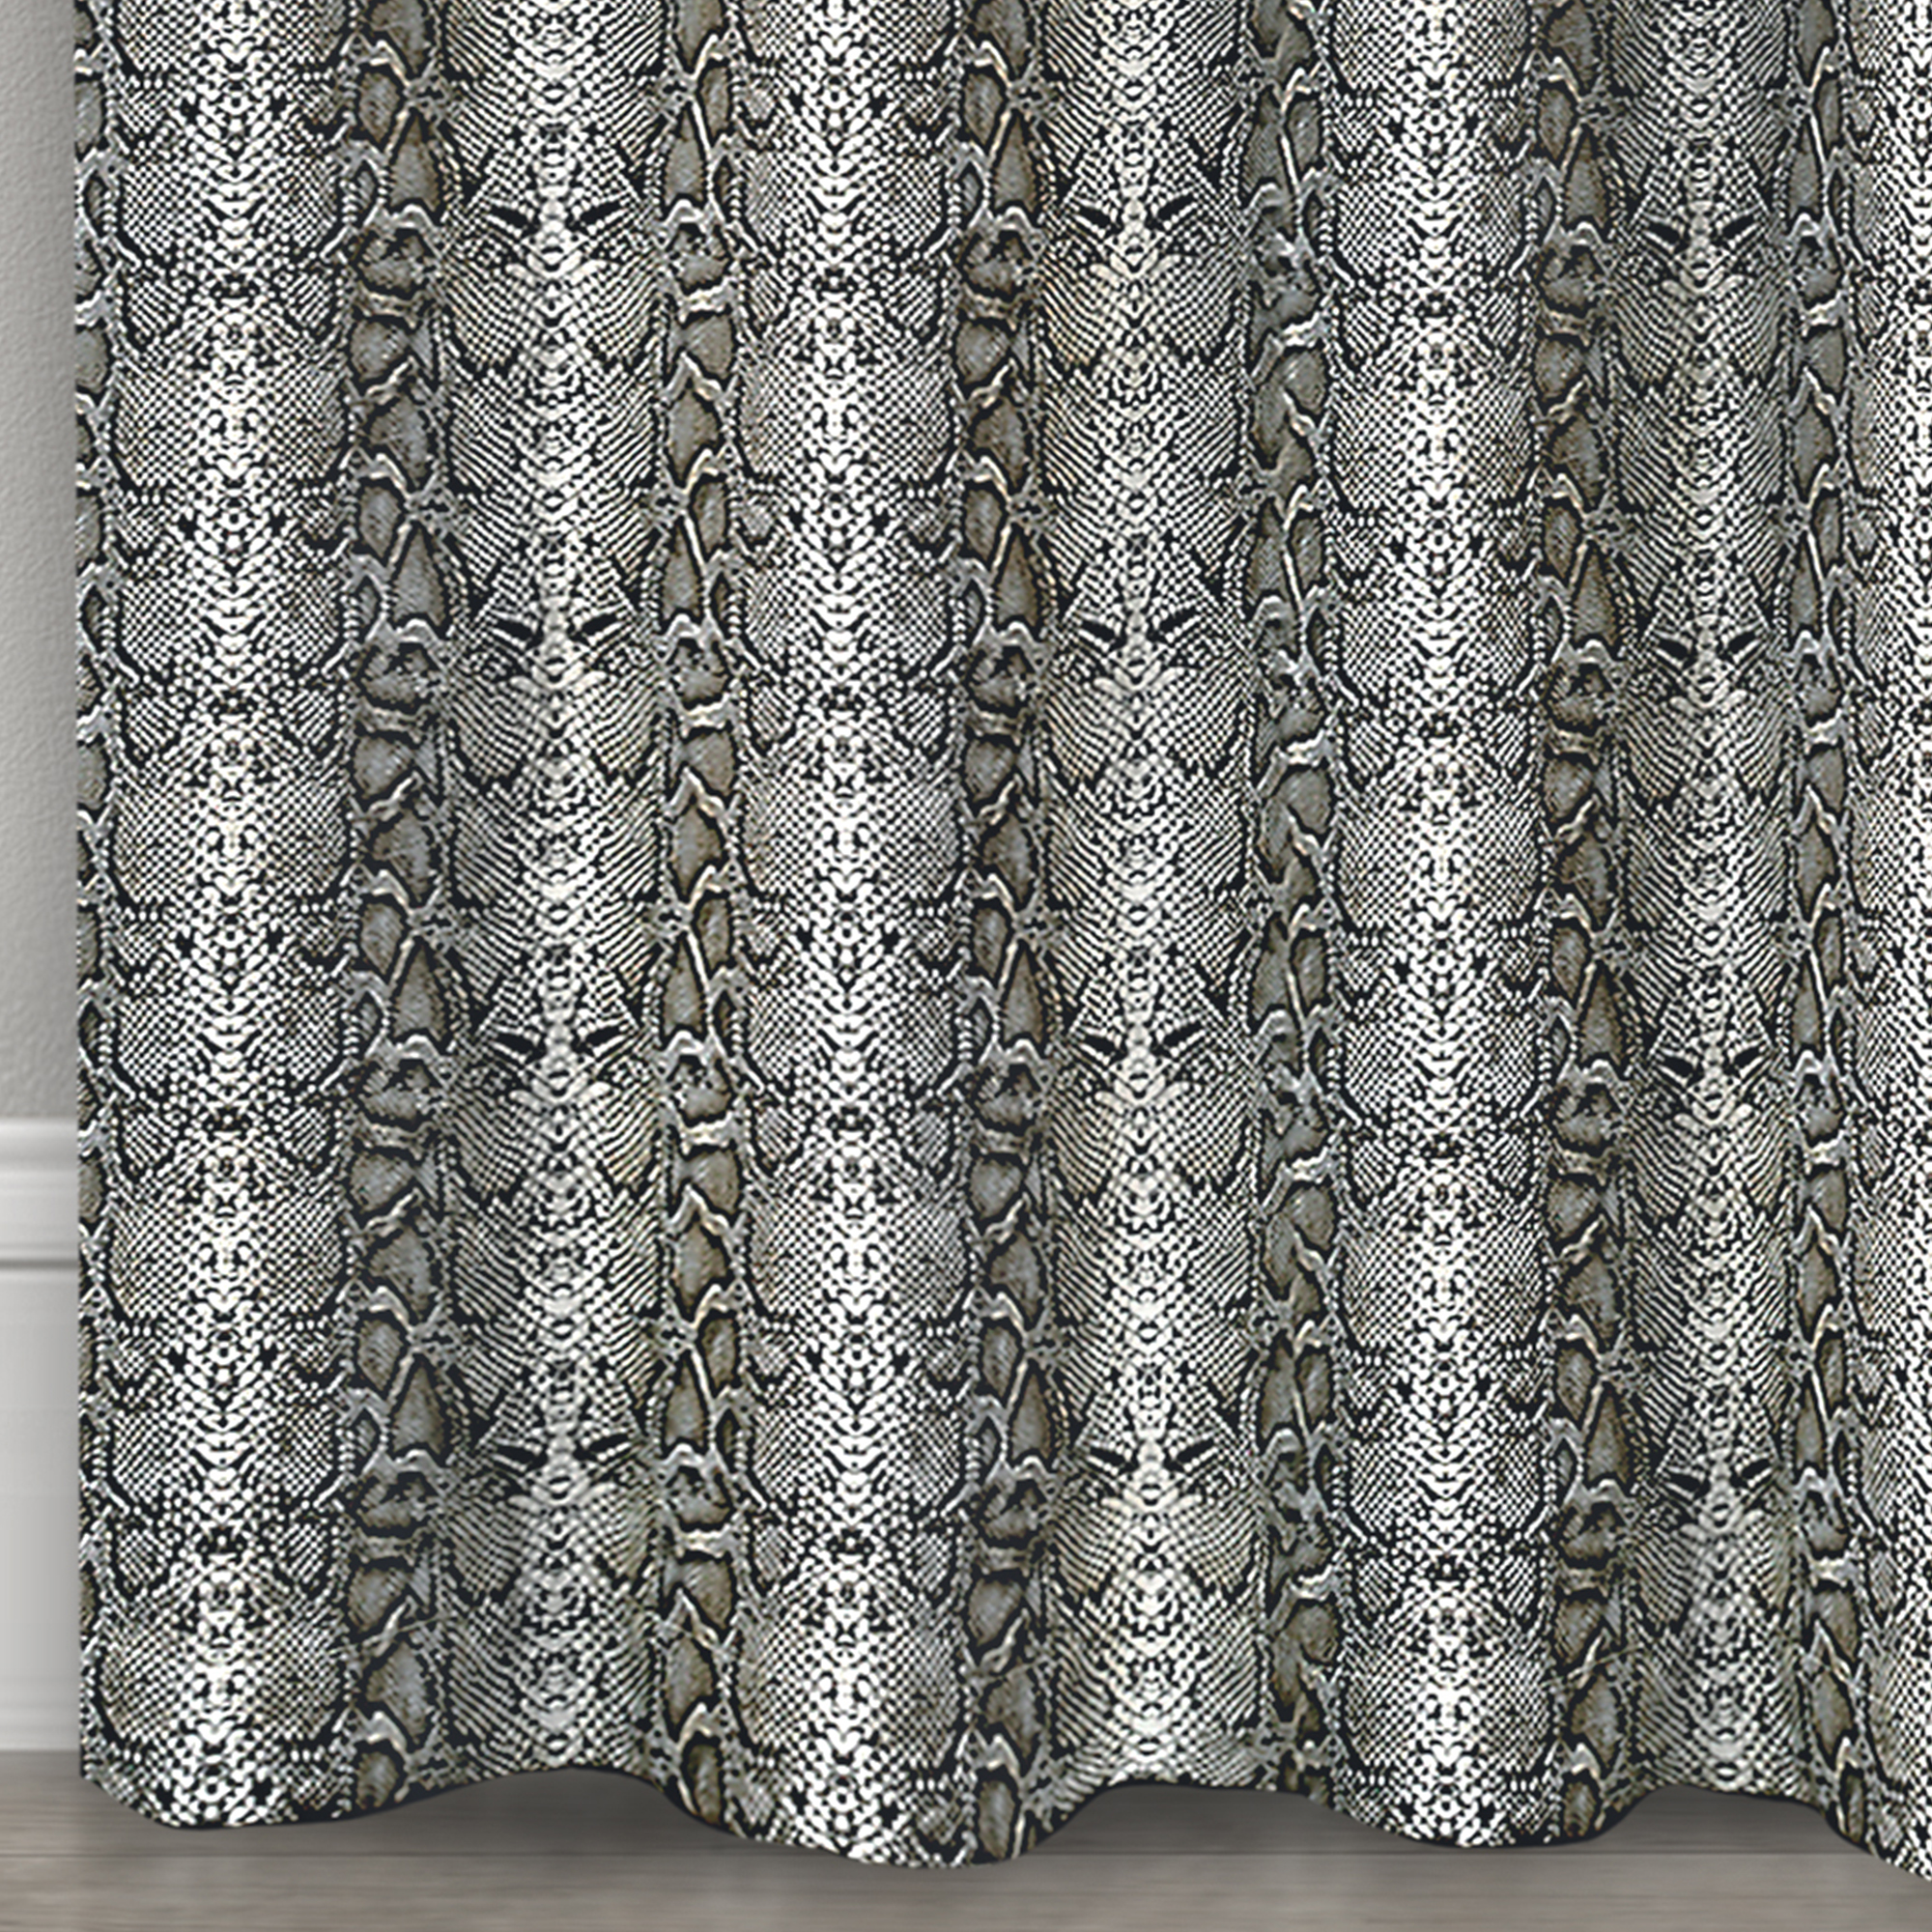 Achim Python Polyester Blackout Window Curtain Panel, Black/Silver, 52" x 84" - image 5 of 5